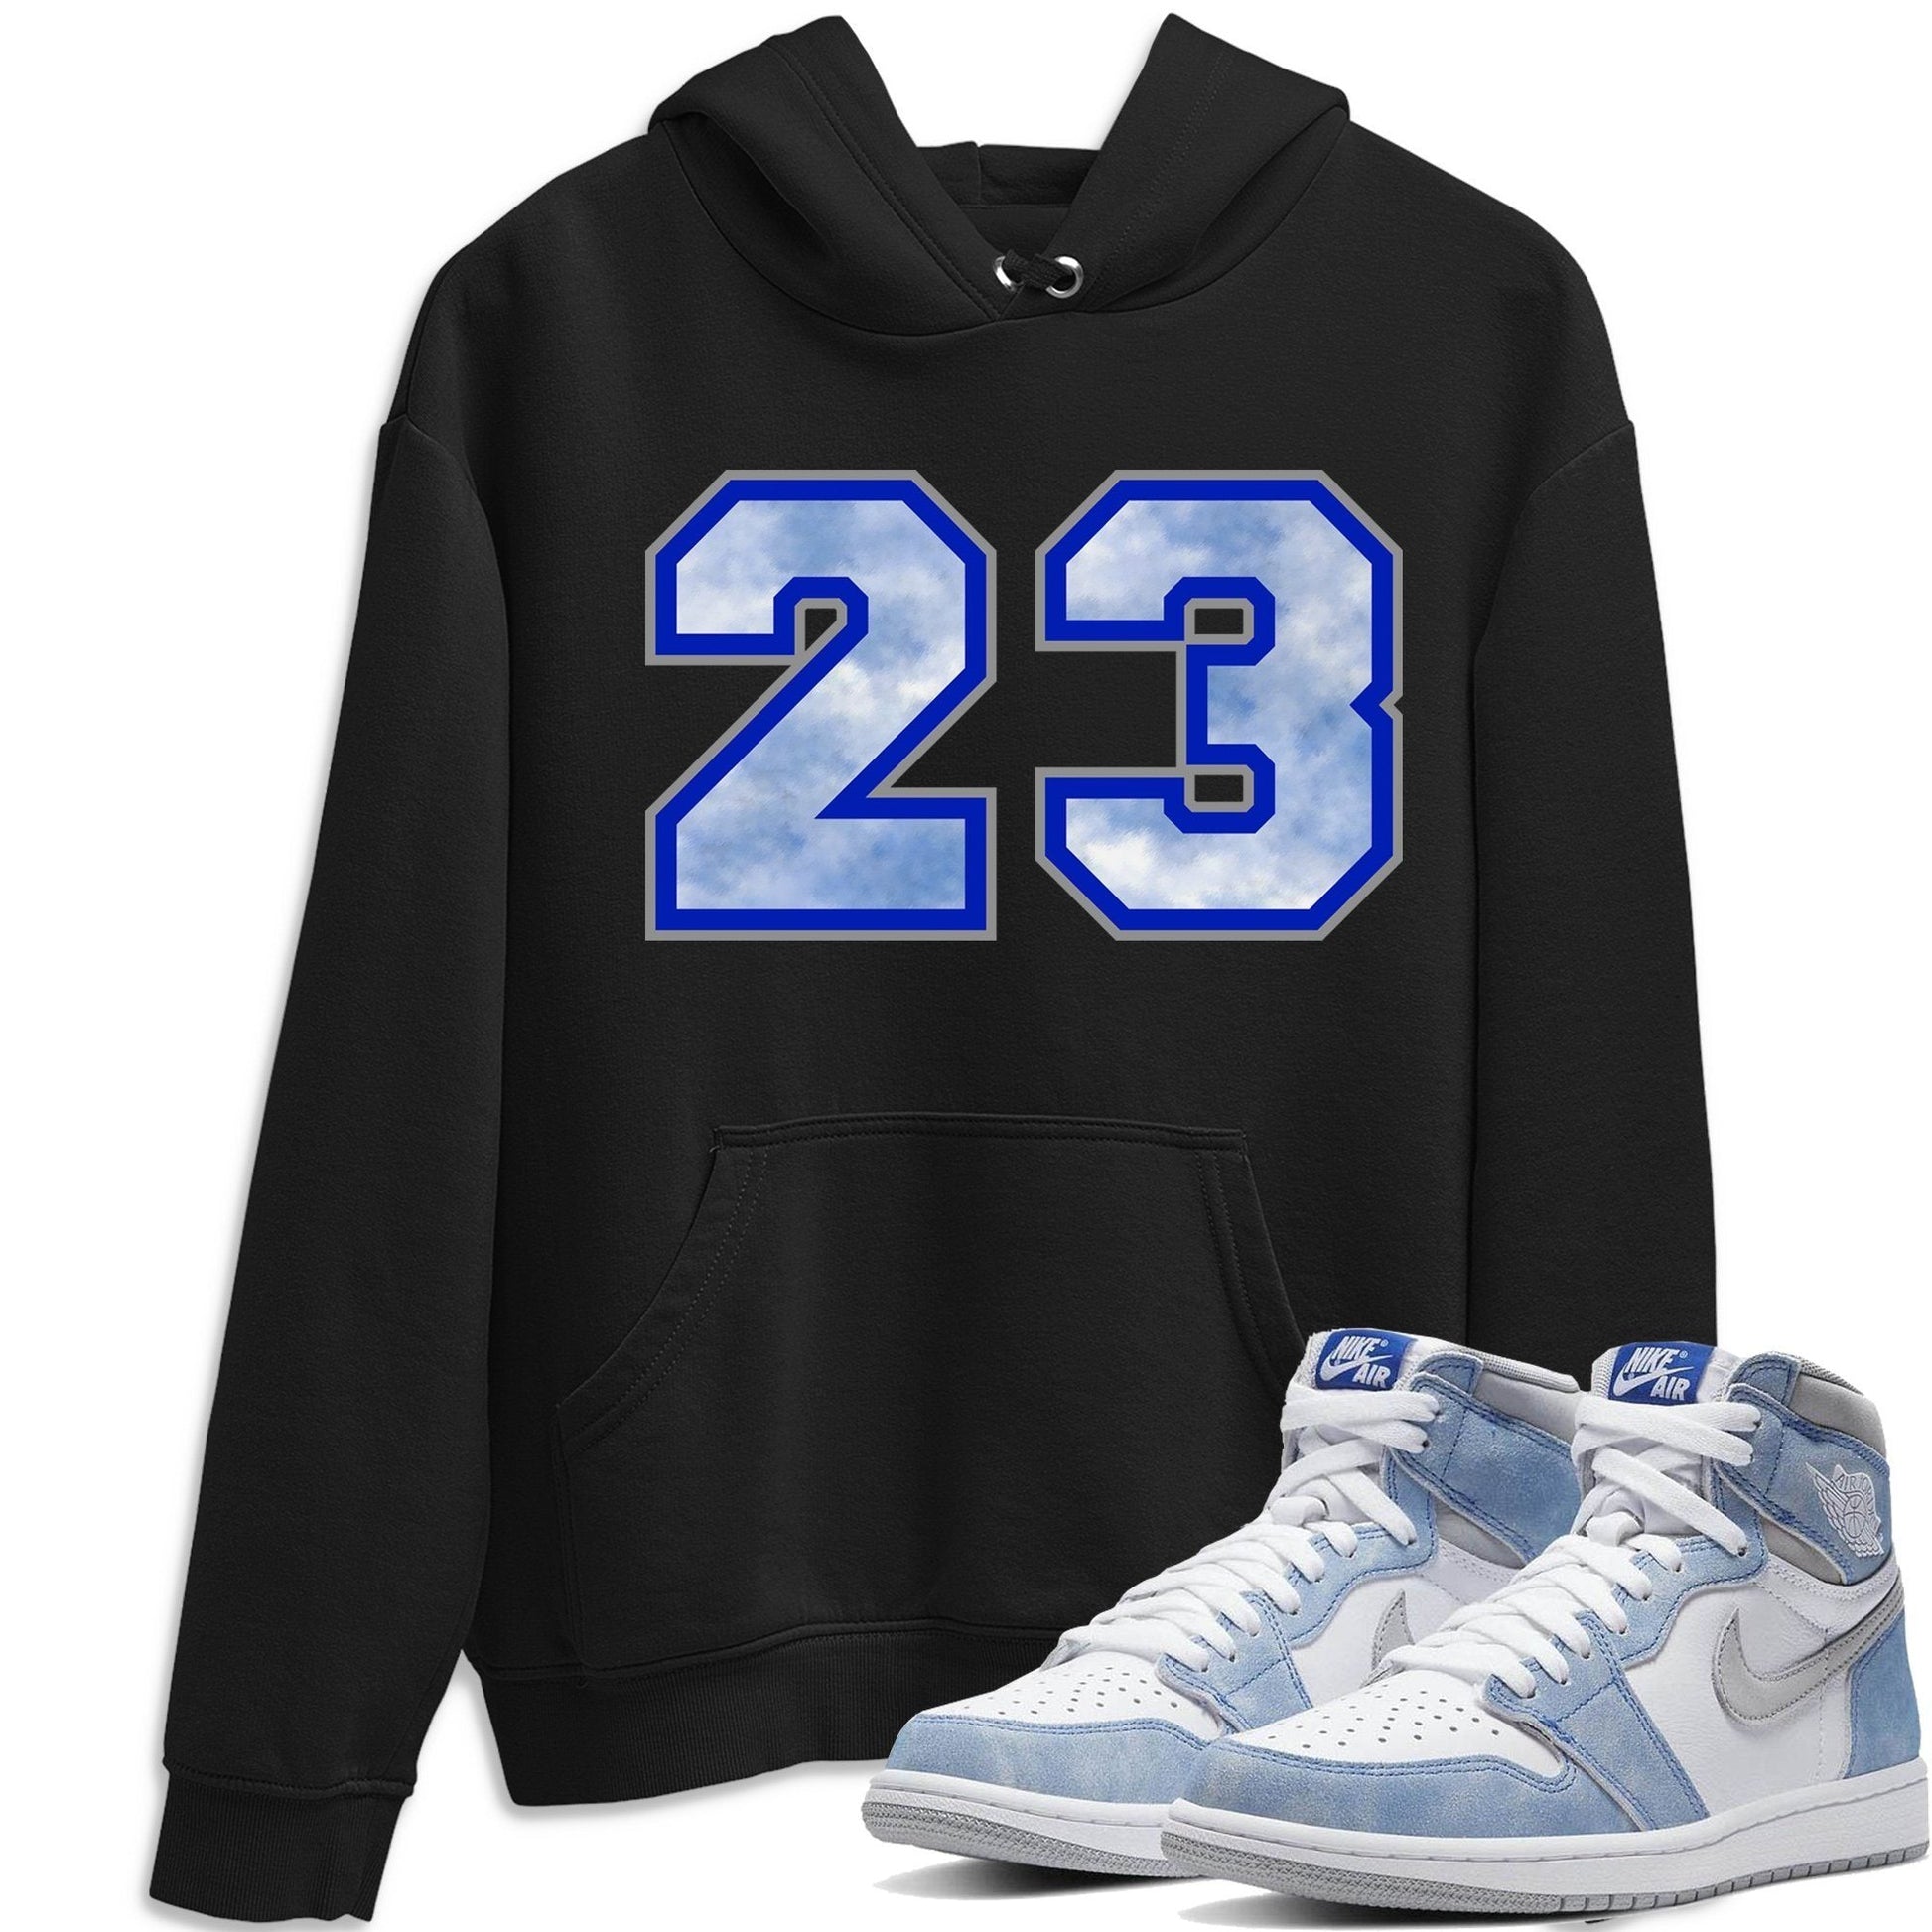 Jordan 1 Hyper Royal Sneaker Match Tees Number 23 Sneaker Tees Jordan 1 Hyper Royal Sneaker Release Tees Unisex Shirts